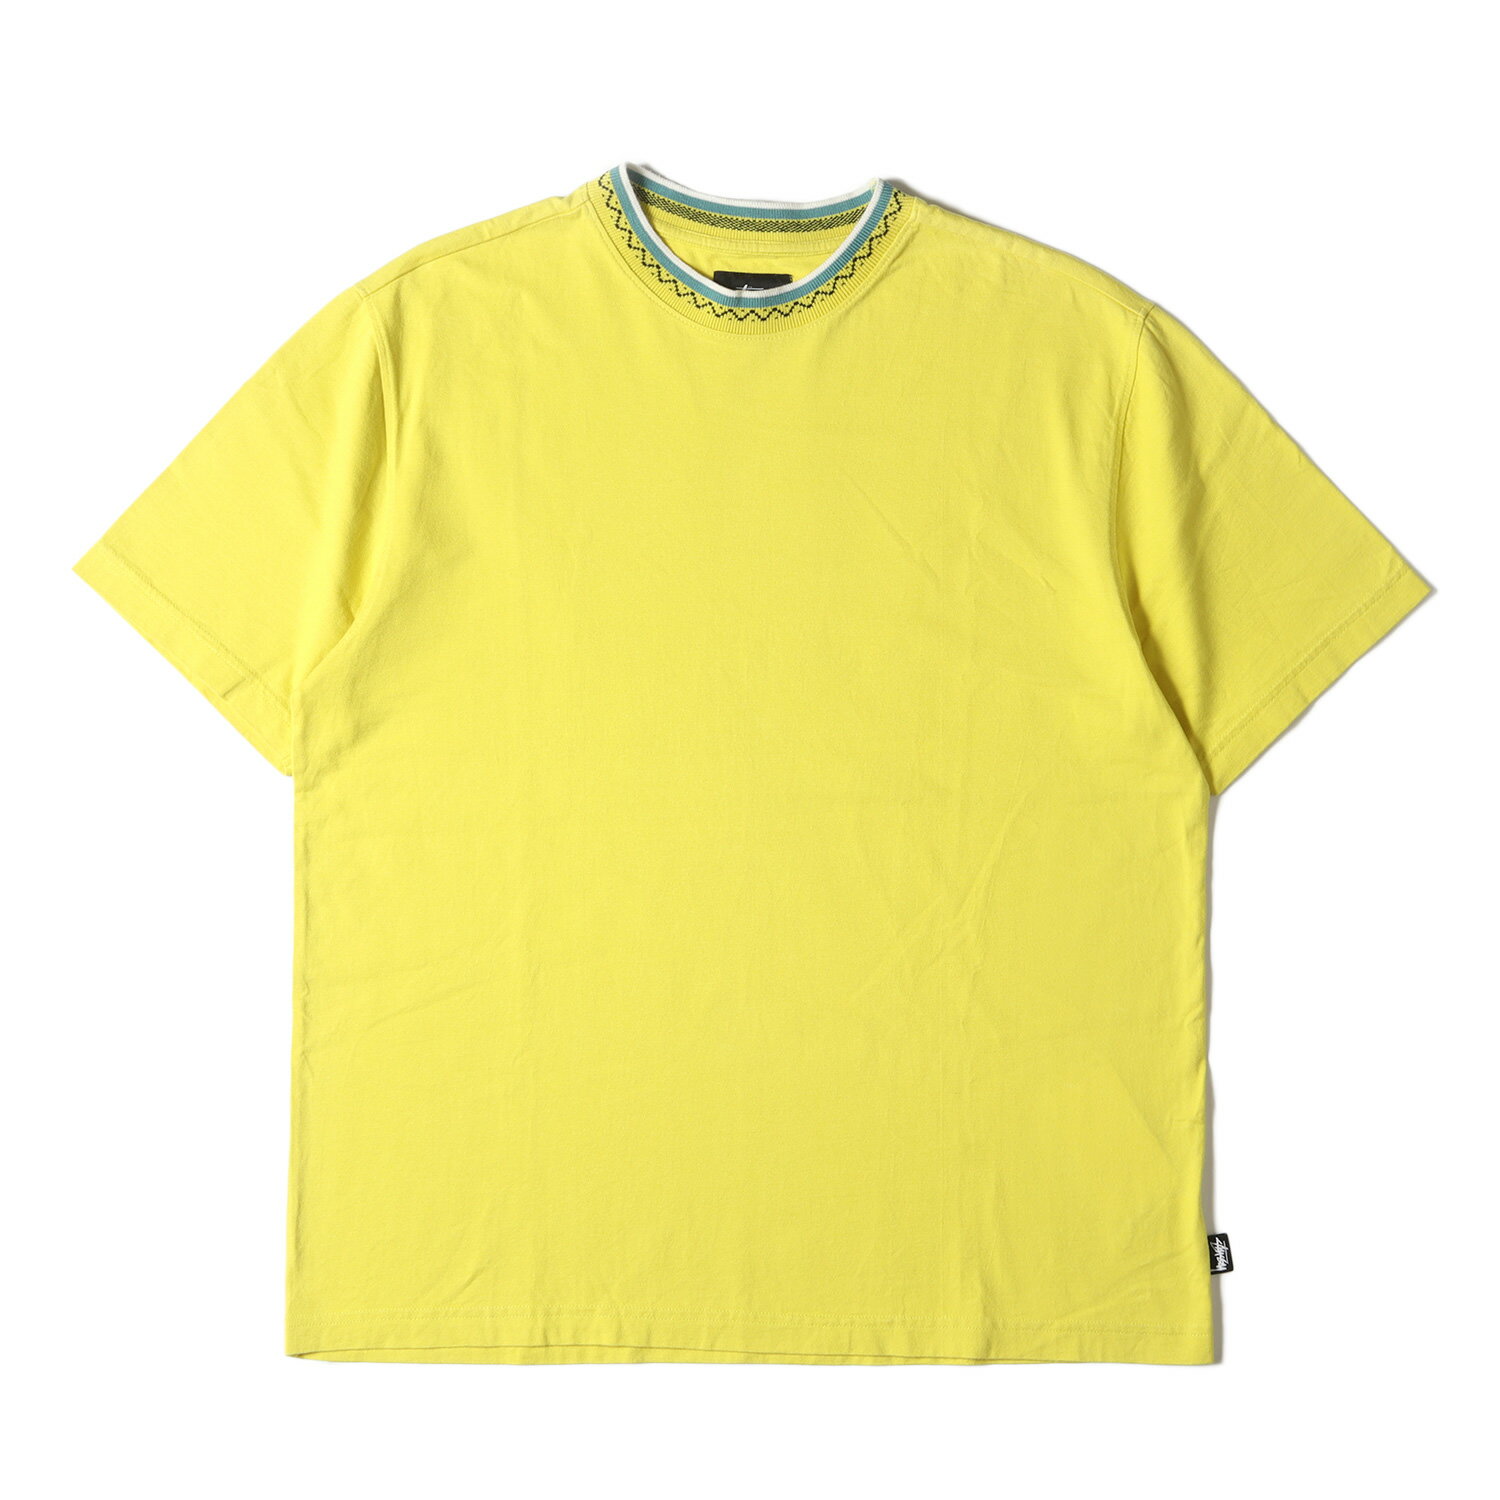 STUSSY ステューシー Tシャツ サイズ:M リブデザイン クルーネック 半袖 Tシャツ イエロー トップス カットソー コットン ストリート ブランド 厚手 